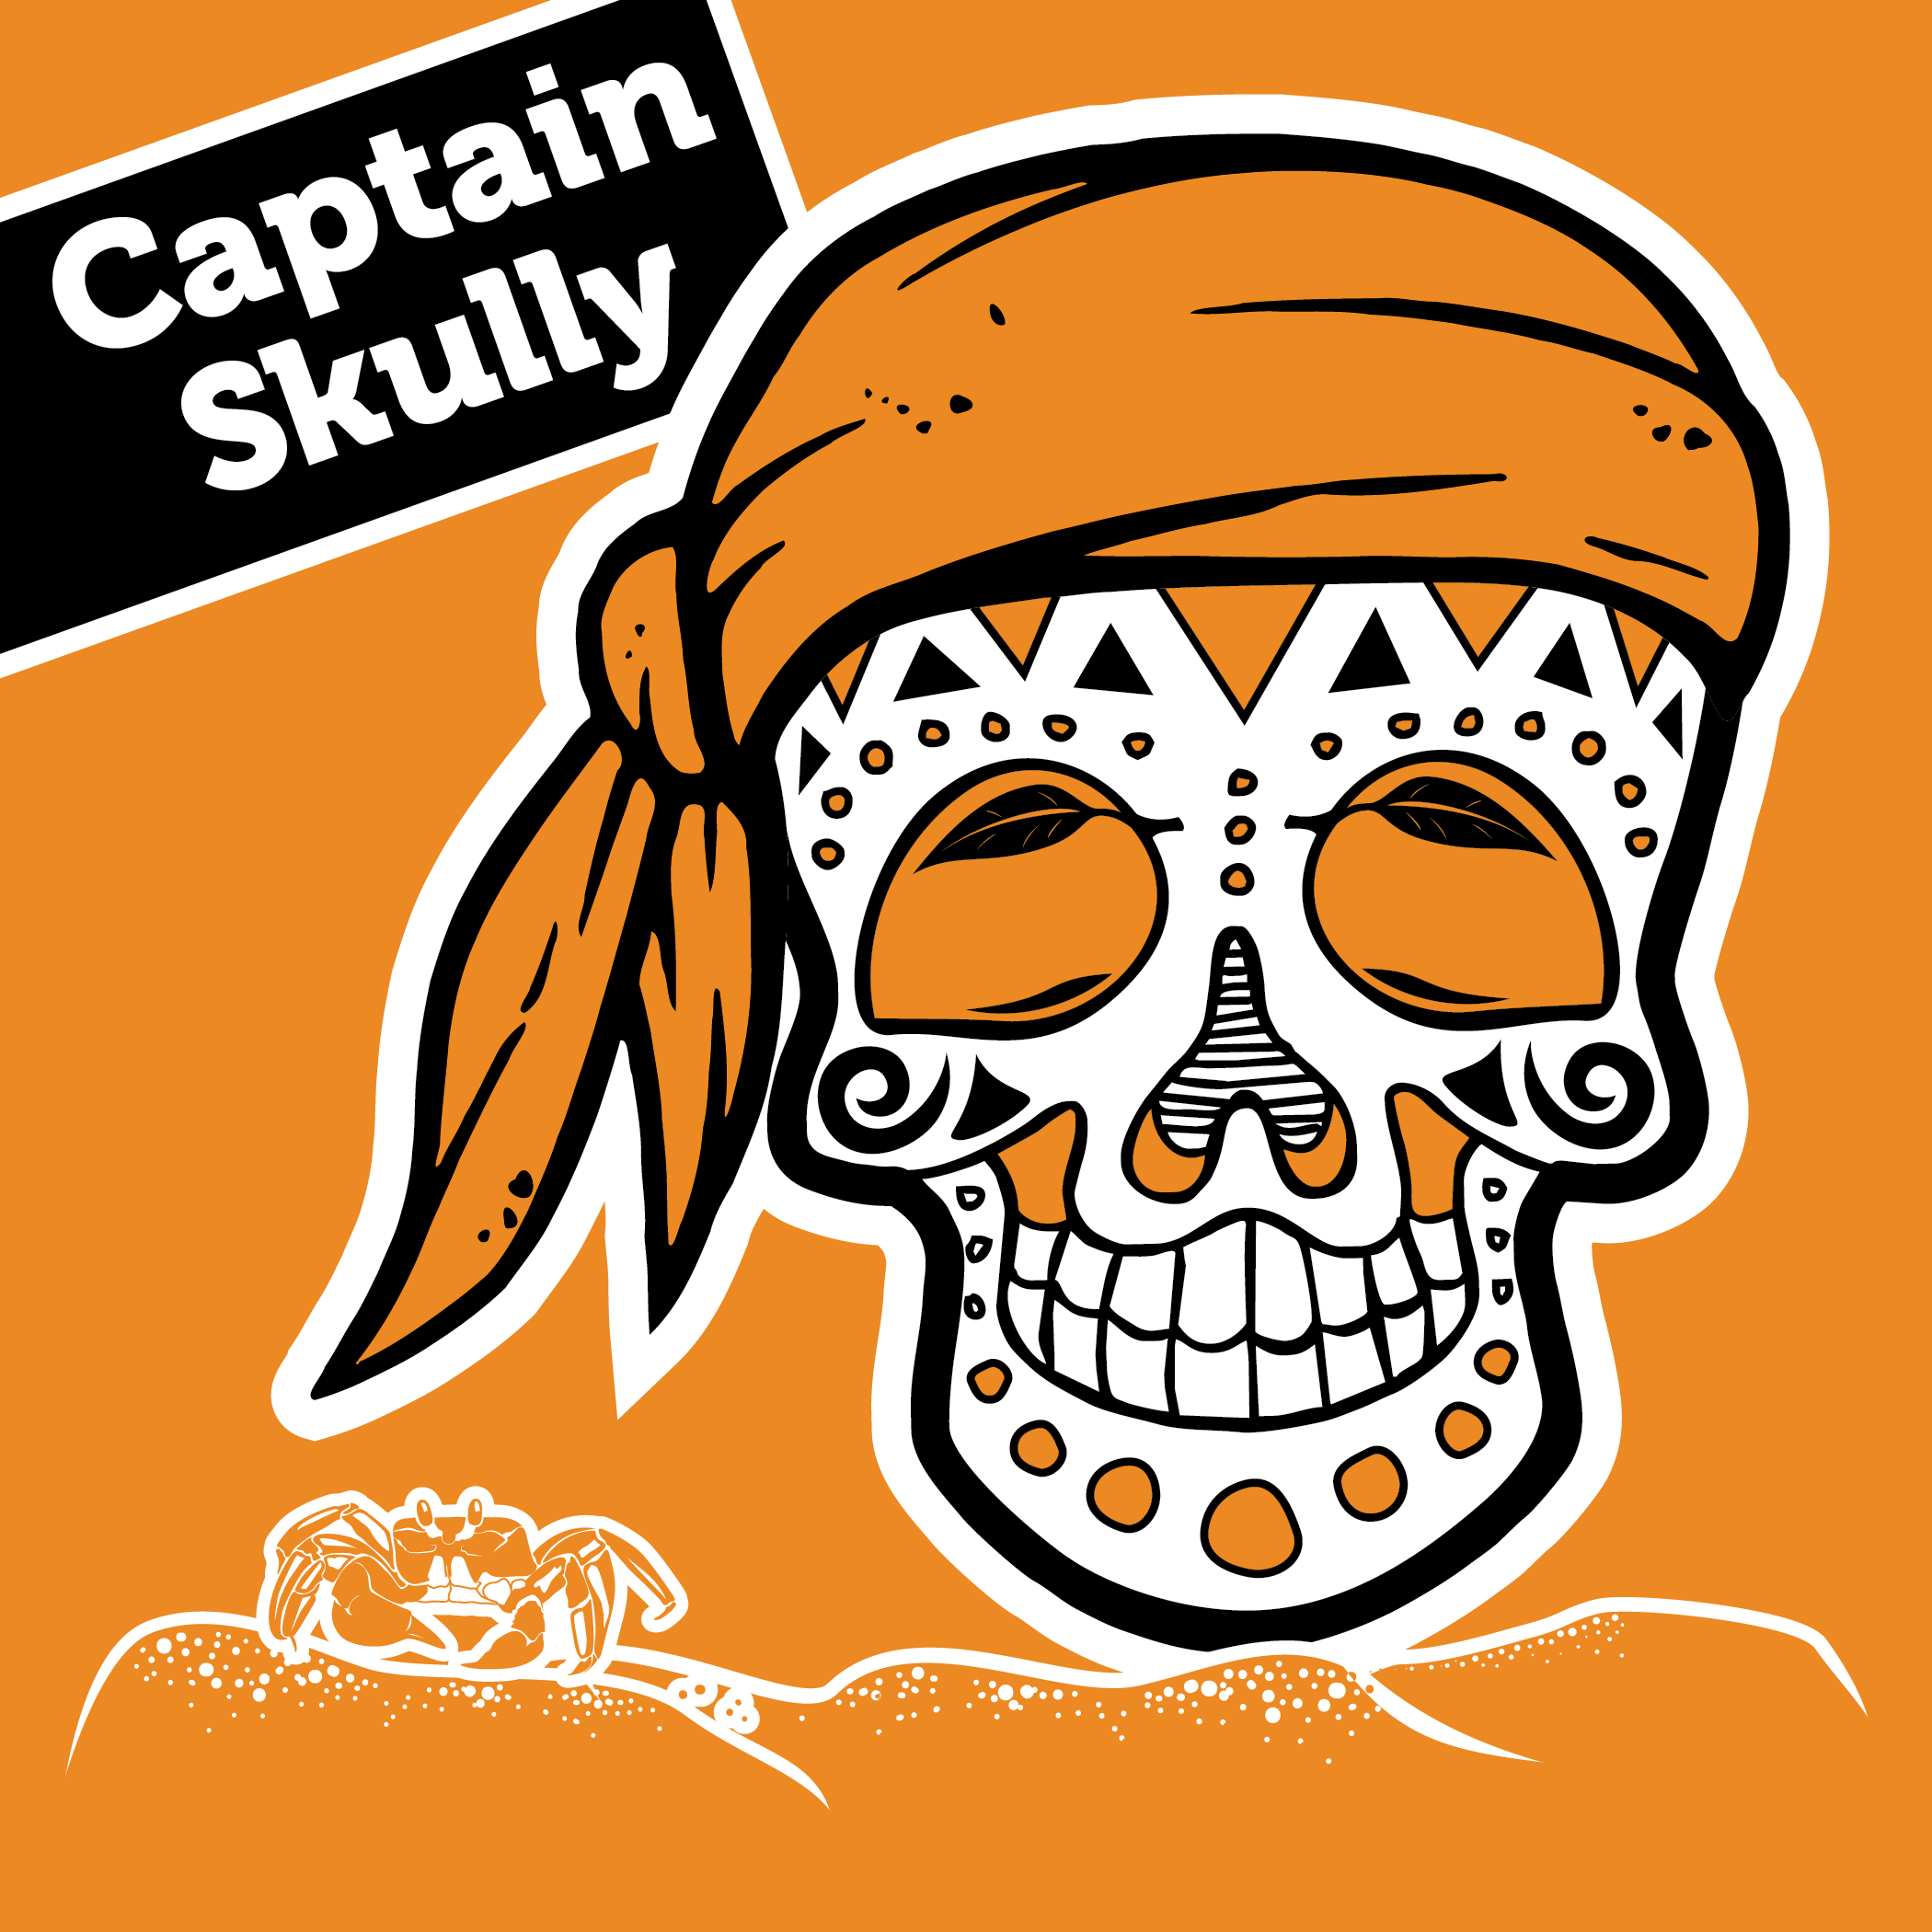 Captain Skully